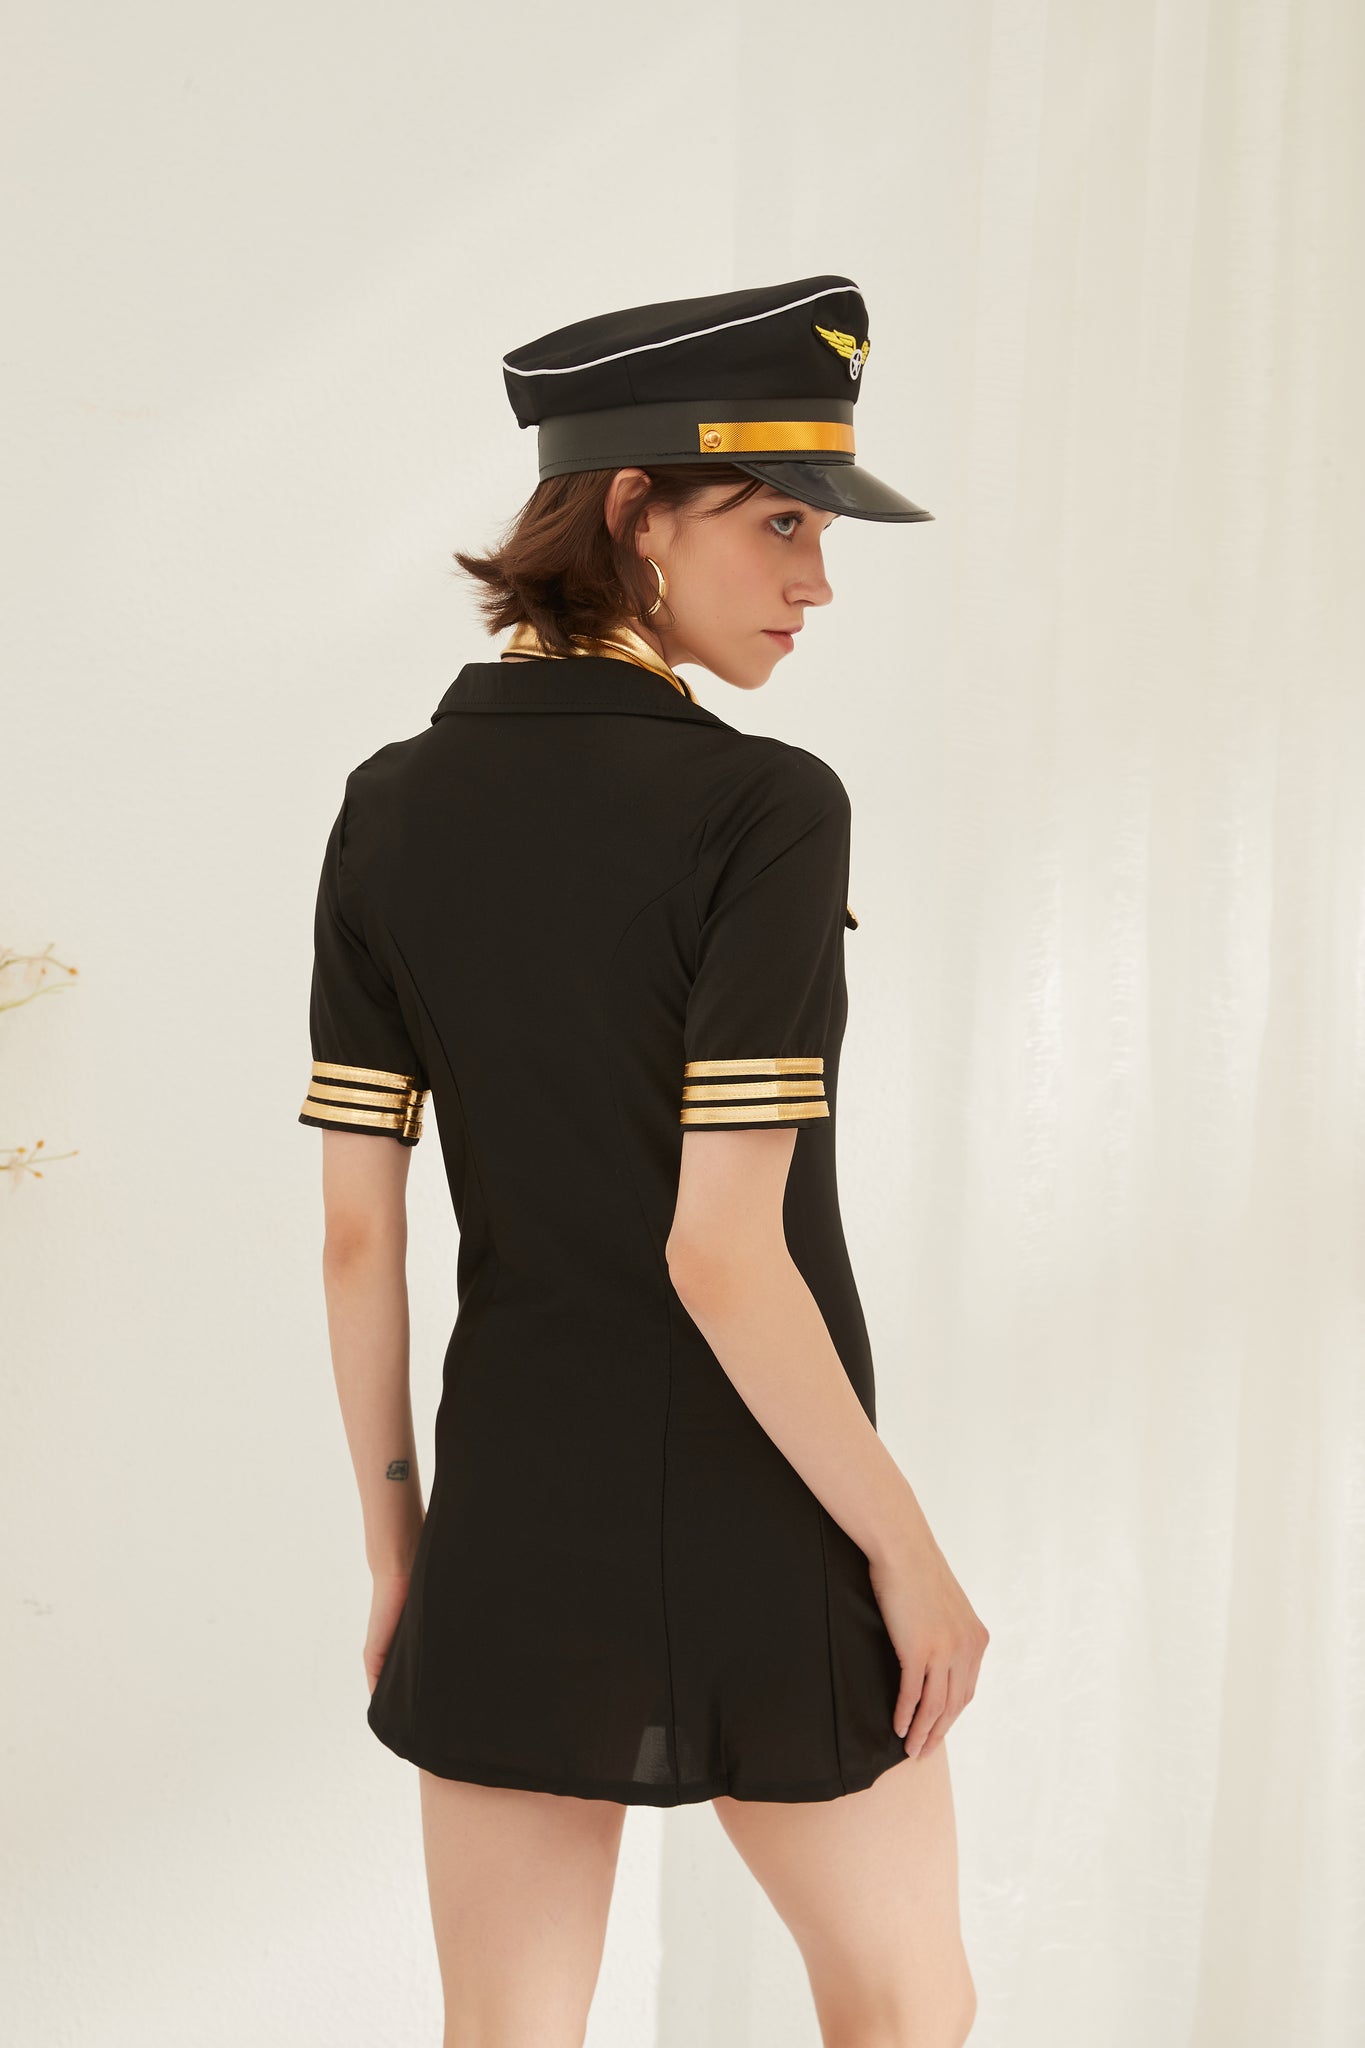 Pilot Black Dress with Gold Trim and Cap